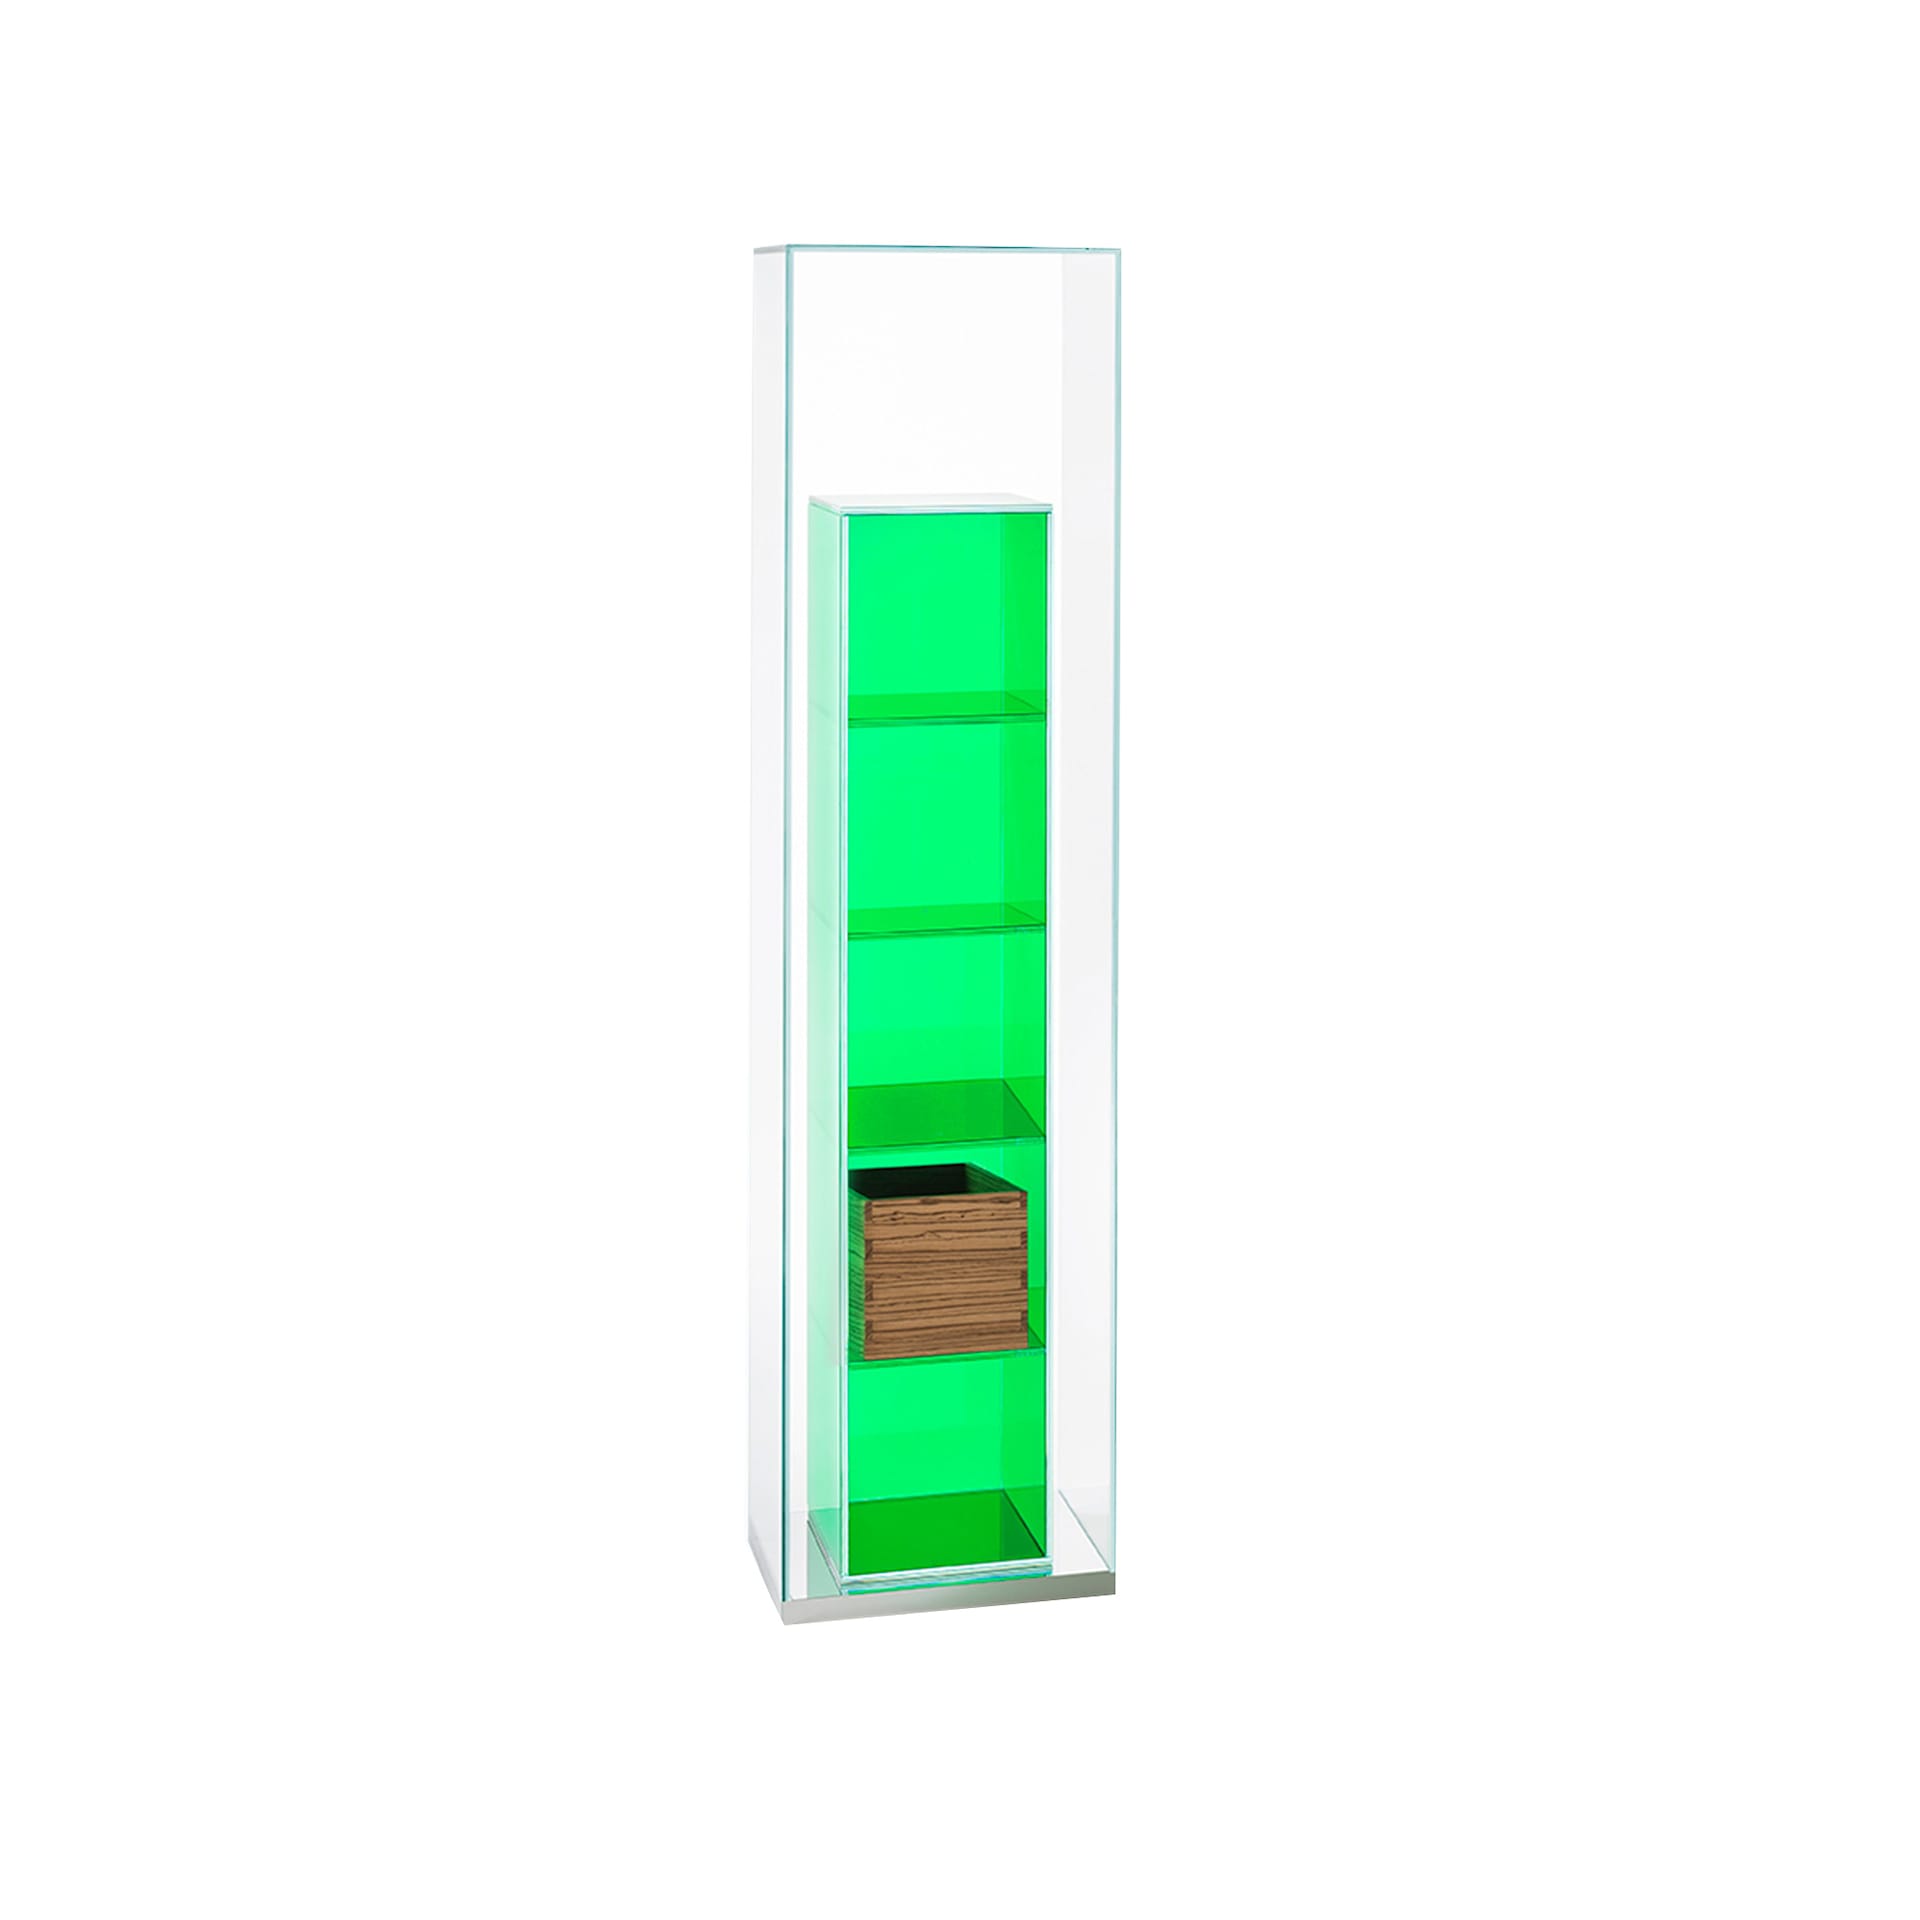 BOXINBOX Container - Glas Italia - Philippe Starck - NO GA